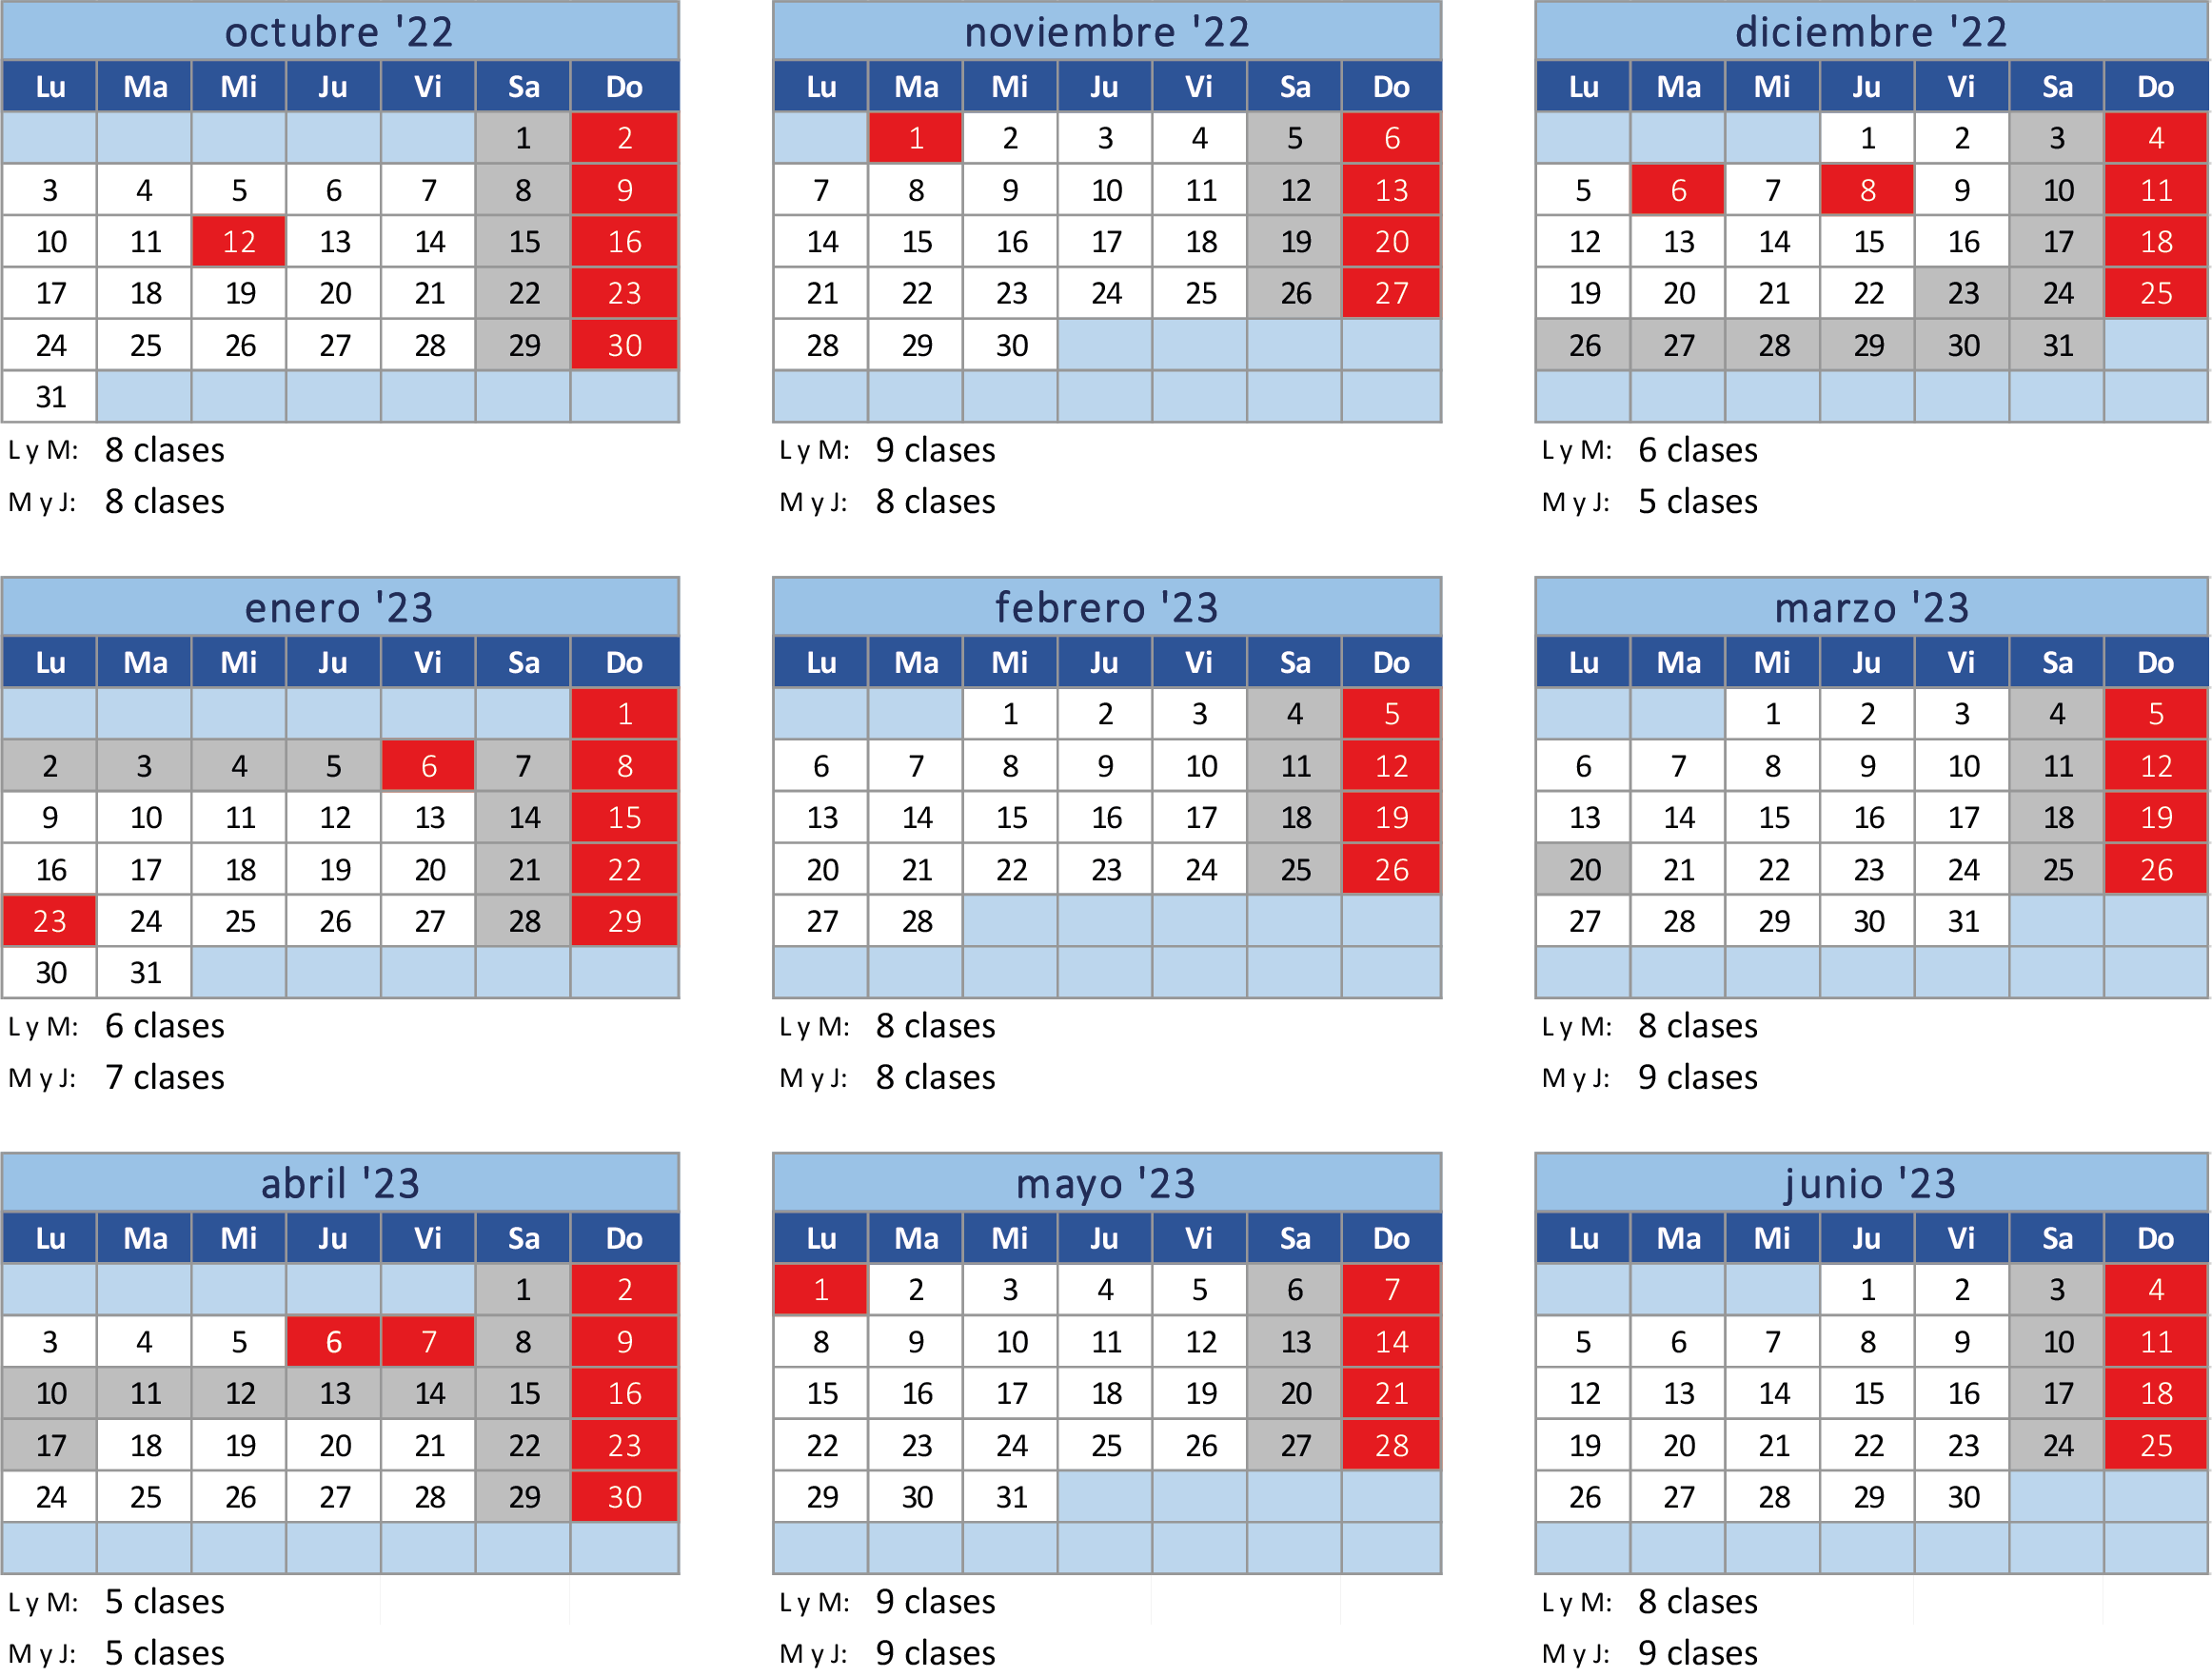 calendarios de clases de ingles por meses del curso 2022 - 23